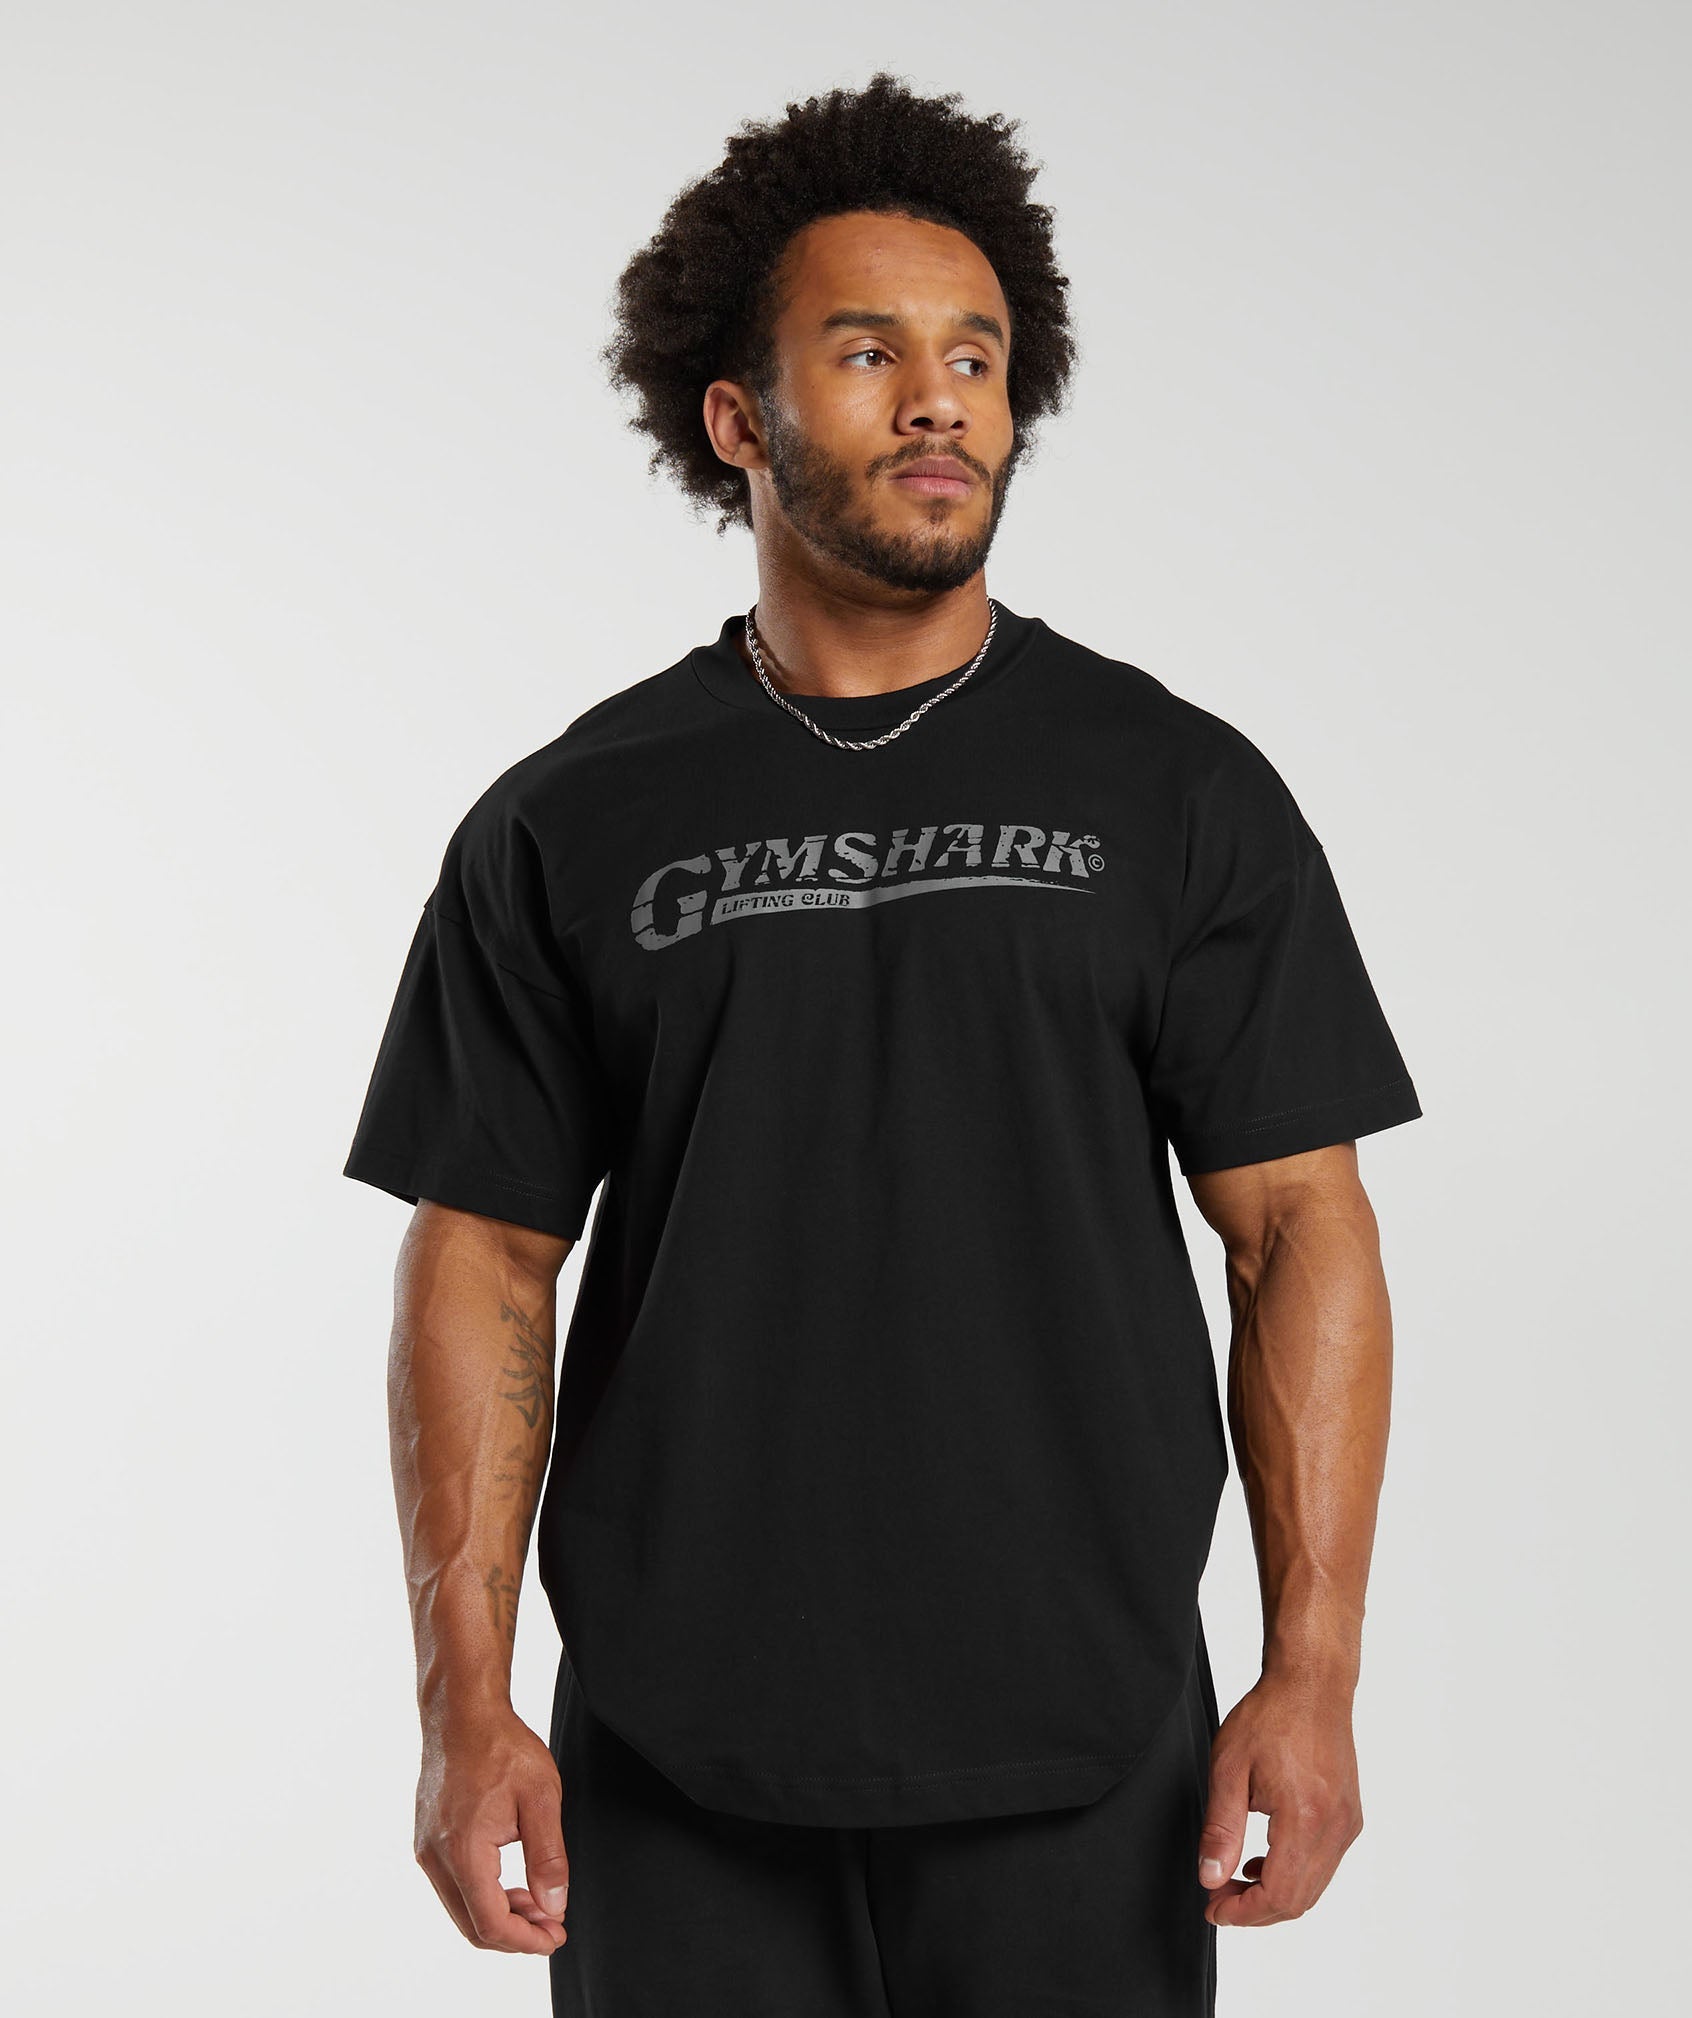 Gymshark Pump Cover T-Shirt - Black